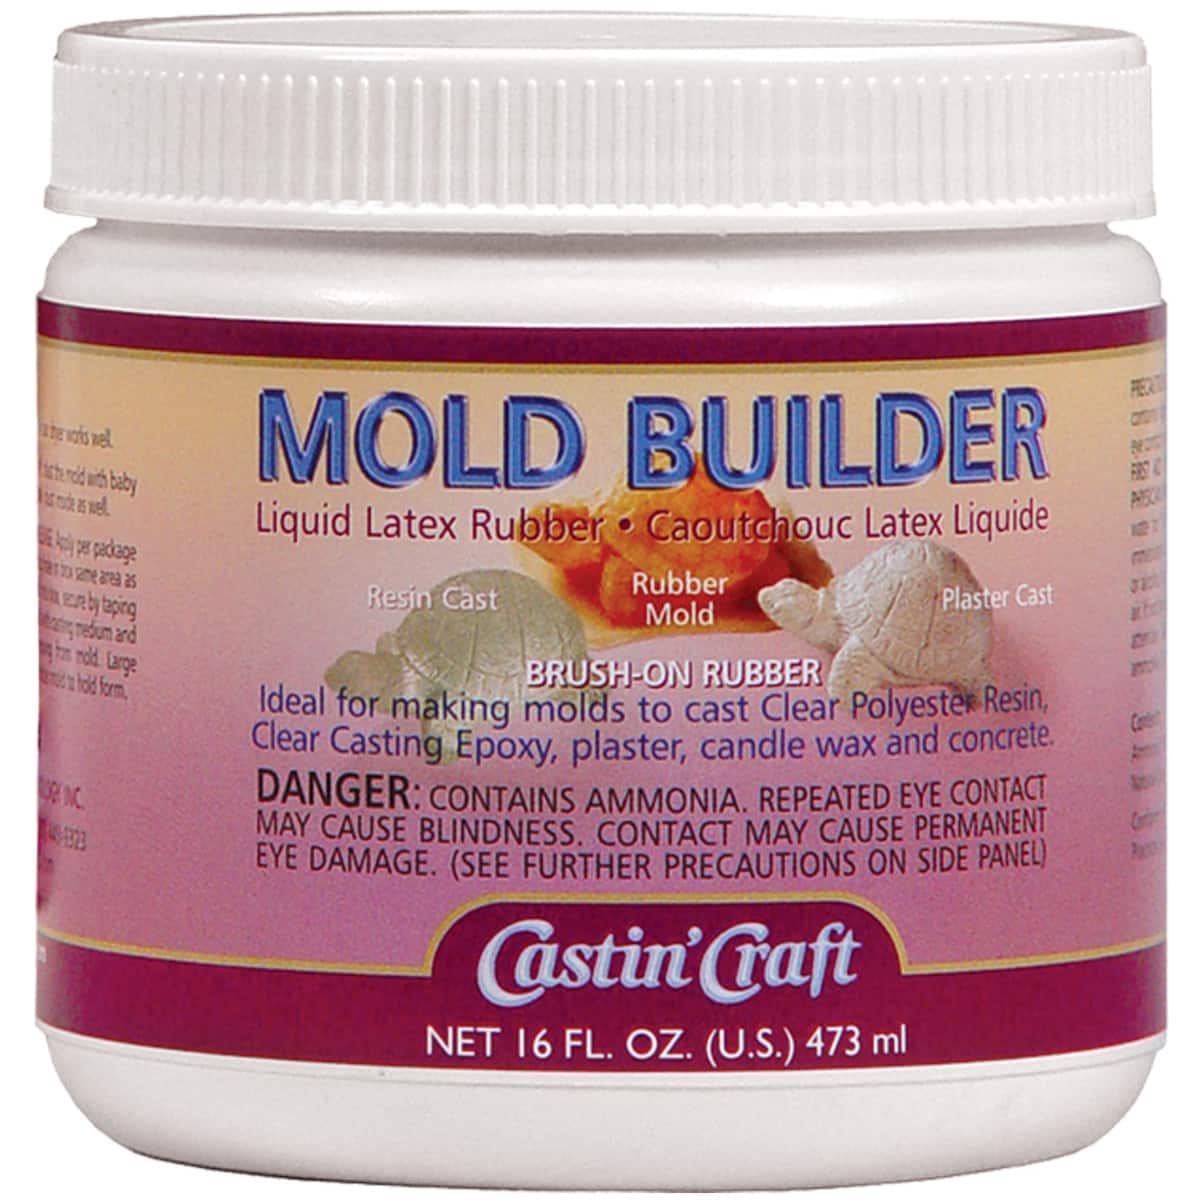 Castin' Craft® Mold Builder Liquid Latex Rubber